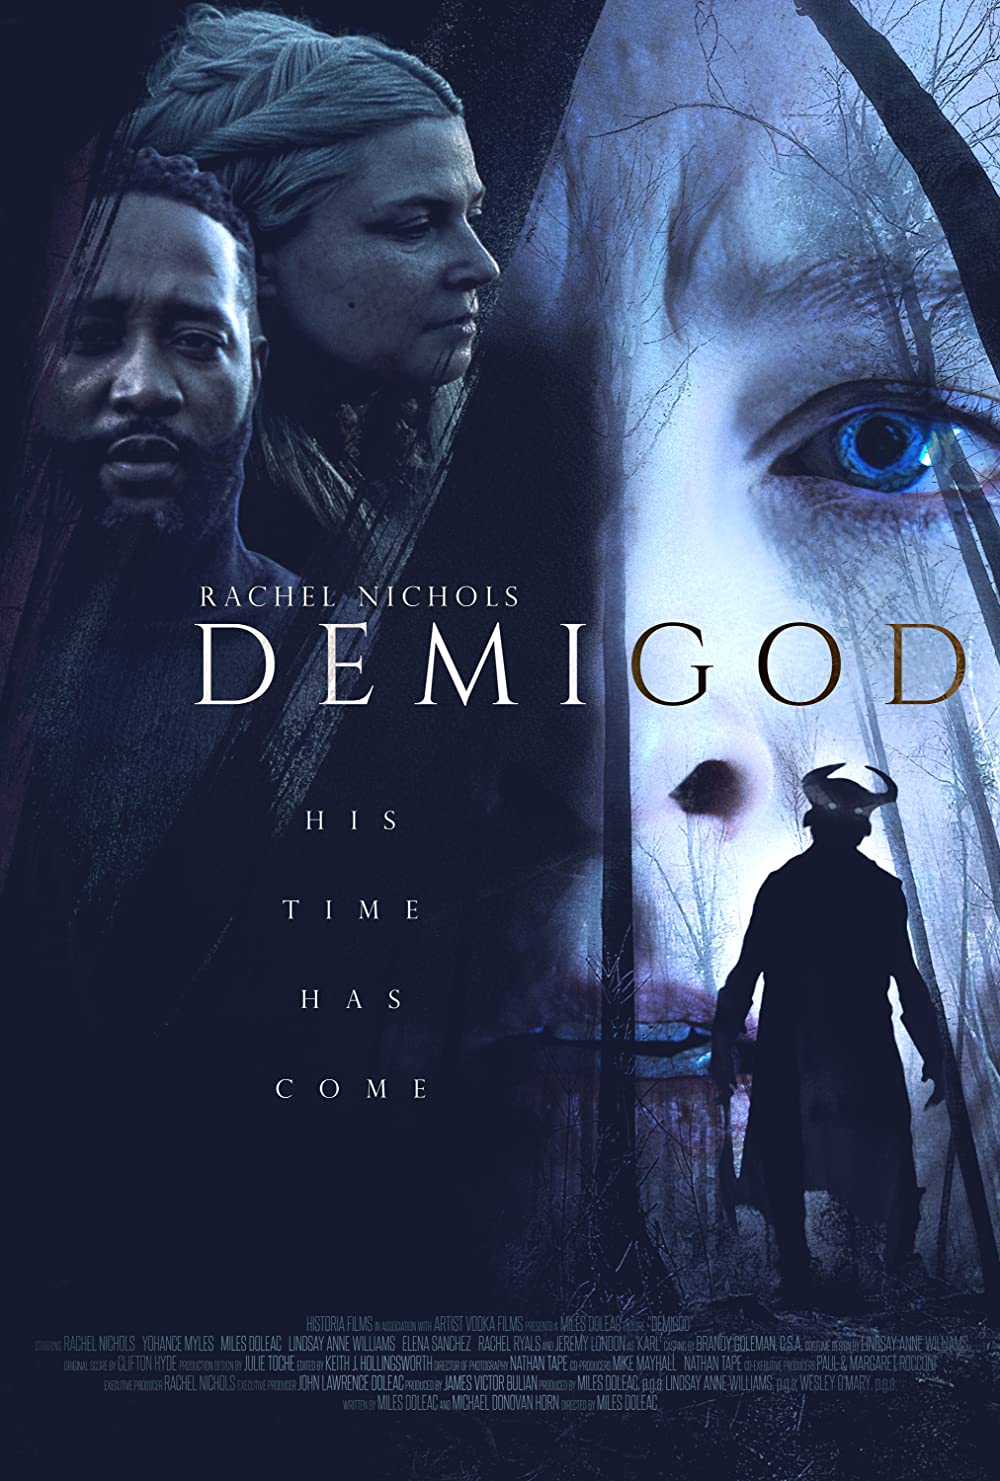 DemiGod poster (Courtesy of Gravitas Ventures)2